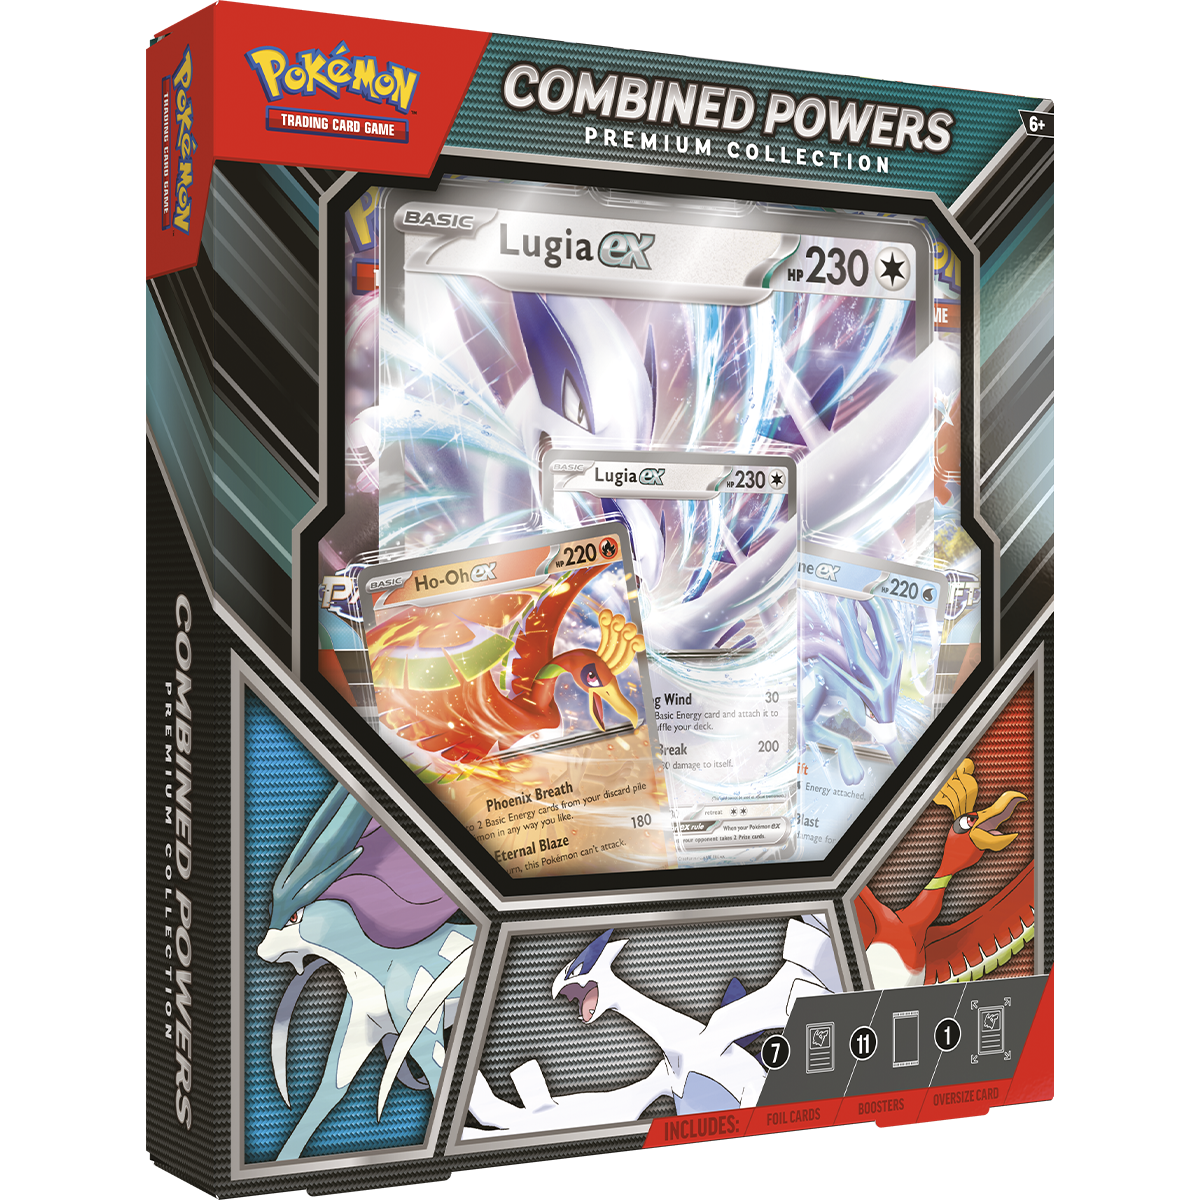 Pokémon combined powers premium collection - POKEMON